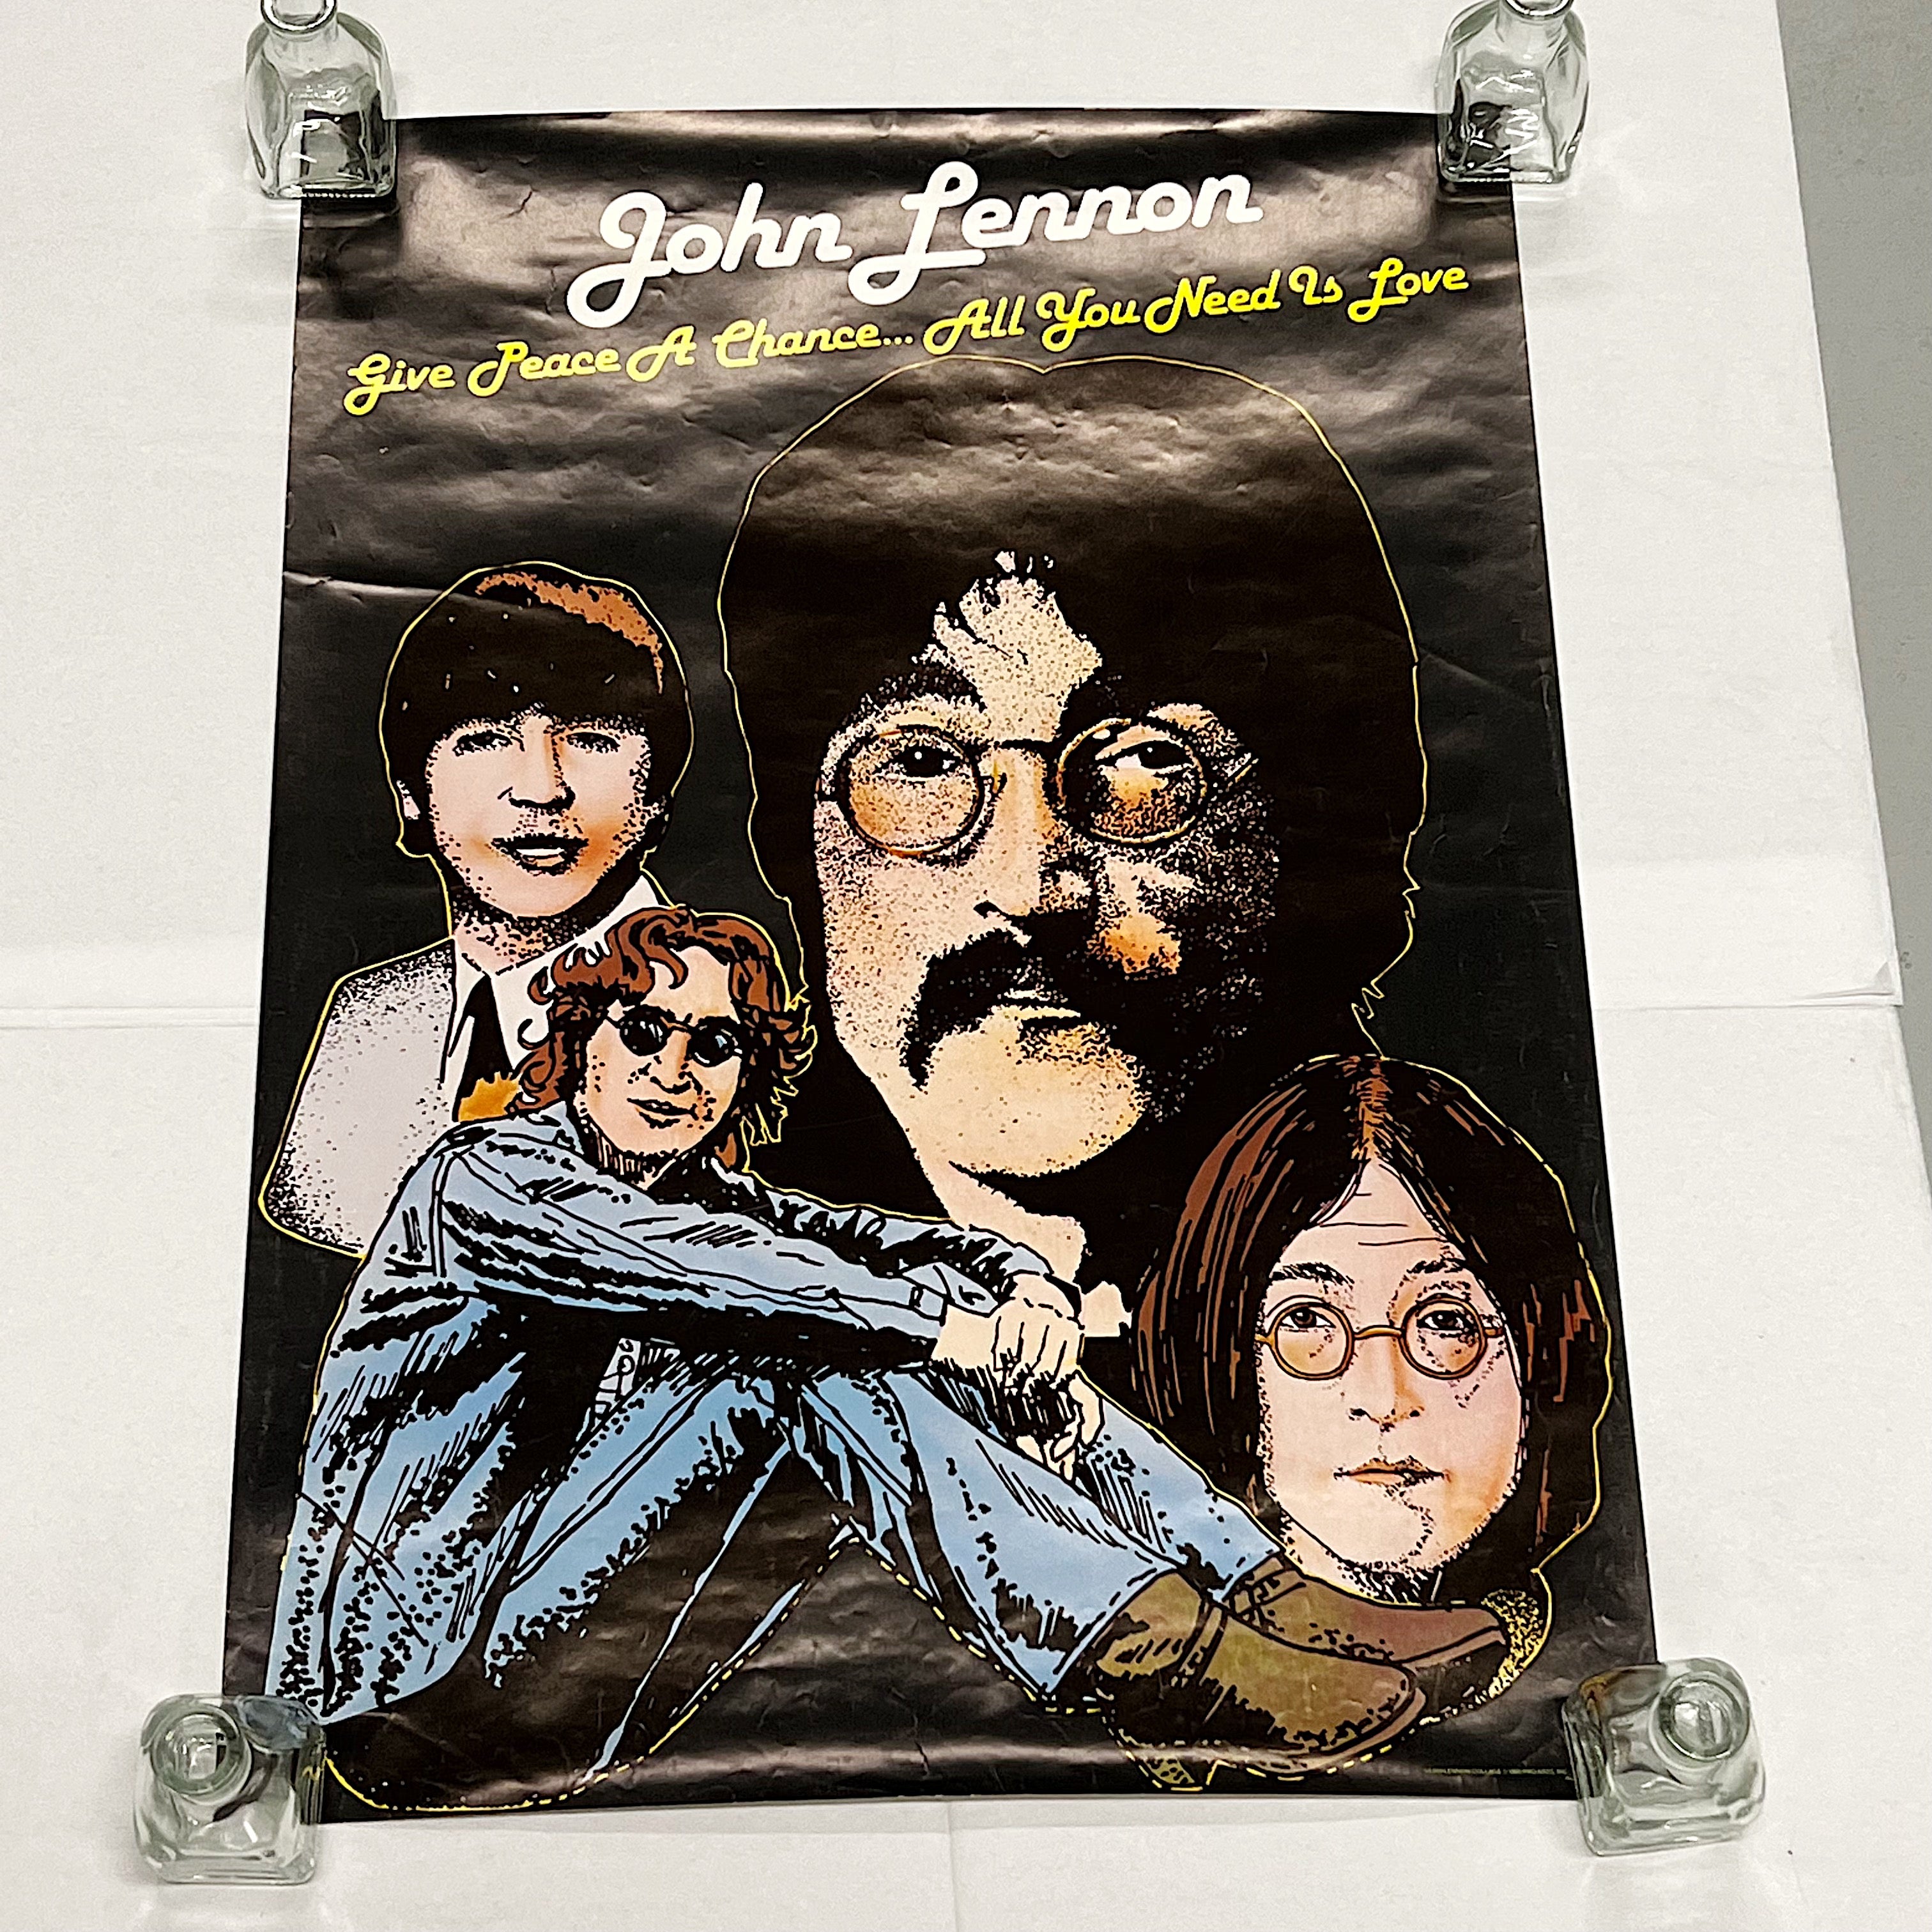 Rare John Lennon Poster from 1980 - Beatles Rock Art Music Posters - Original Vintage - 1980s Peace Love Wall Art - Rare Illustrations Pro Arts